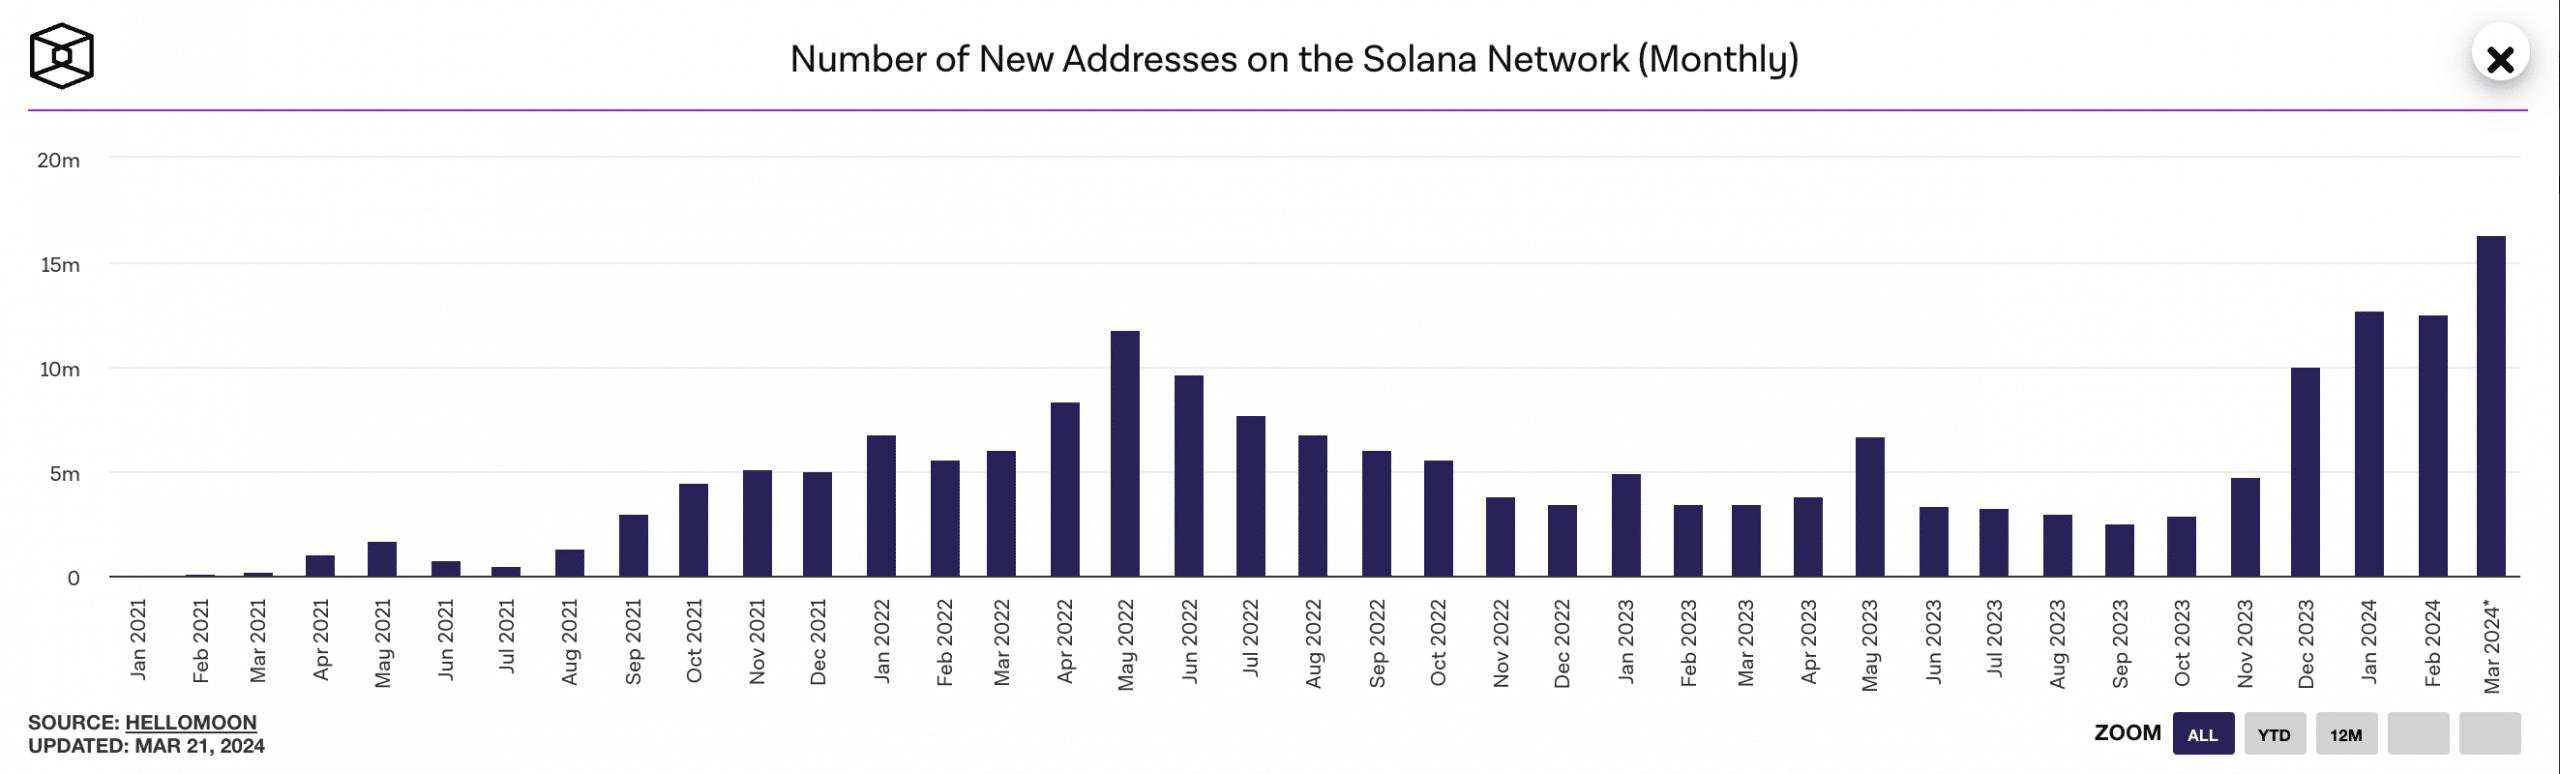 Solana New Addresses